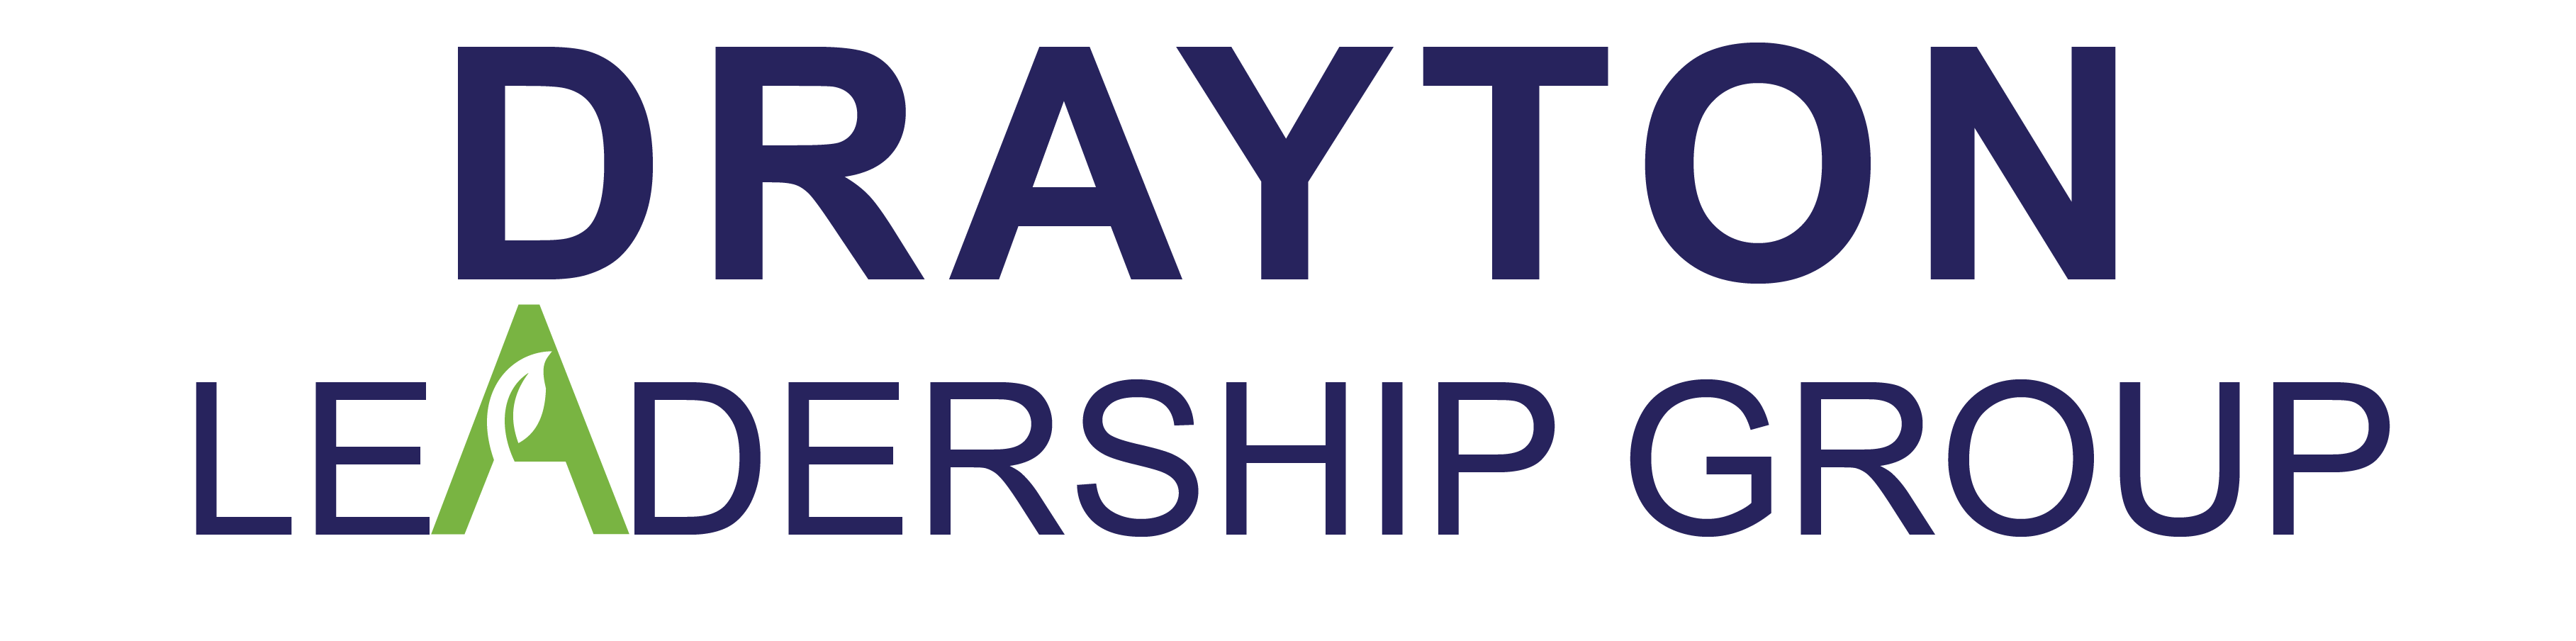 Drayton Leadership Group